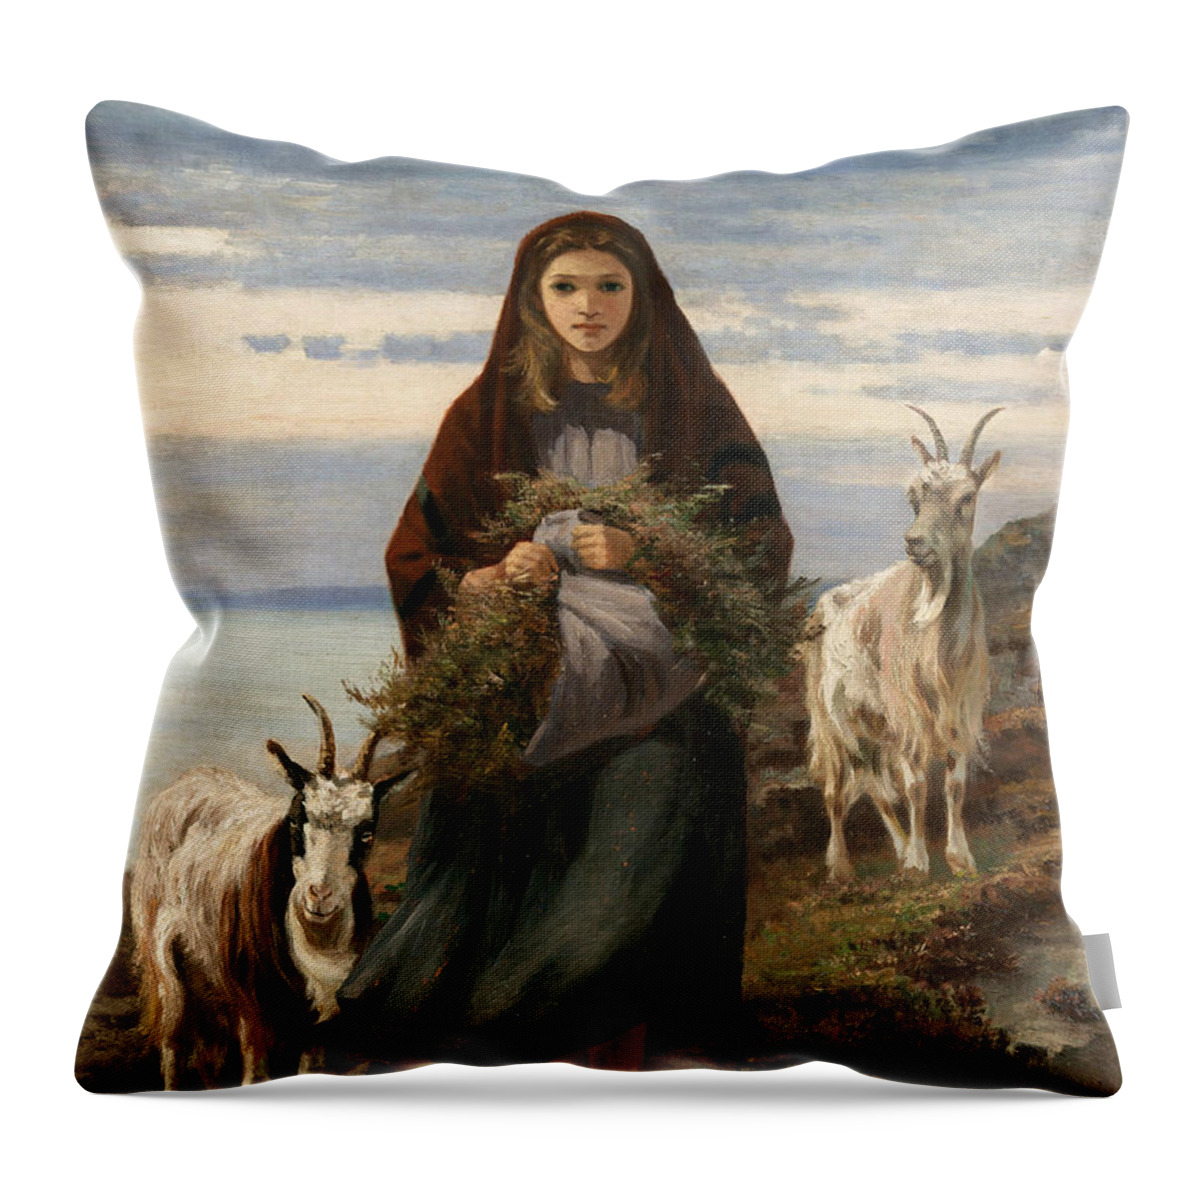 Irish Art Throw Pillow featuring the painting Connemara Girl by Augustus Nicholas Burke